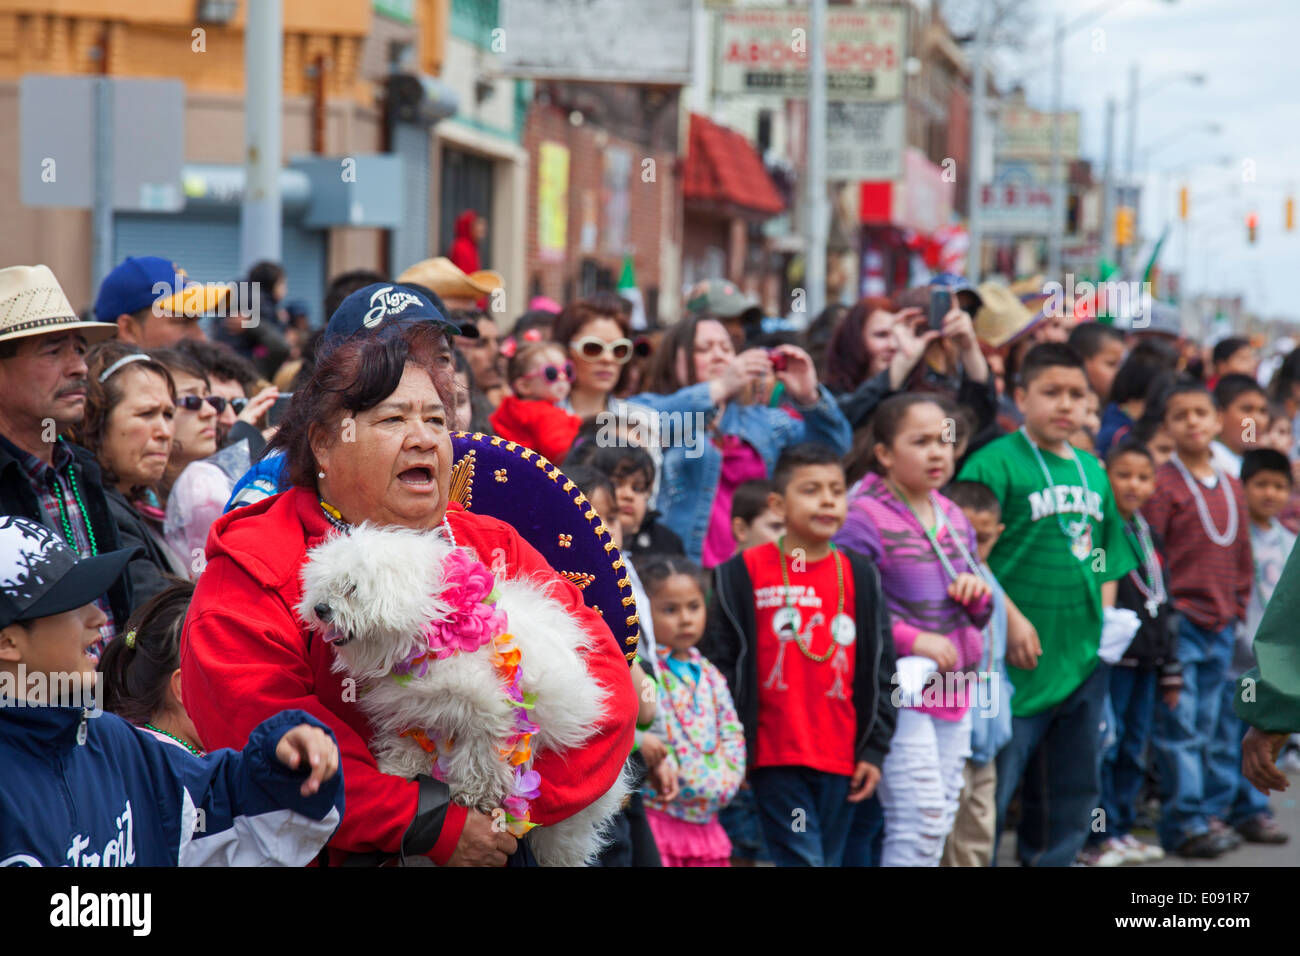 Detroit, Michigan The annual Cinco de Mayo parade in the Mexican